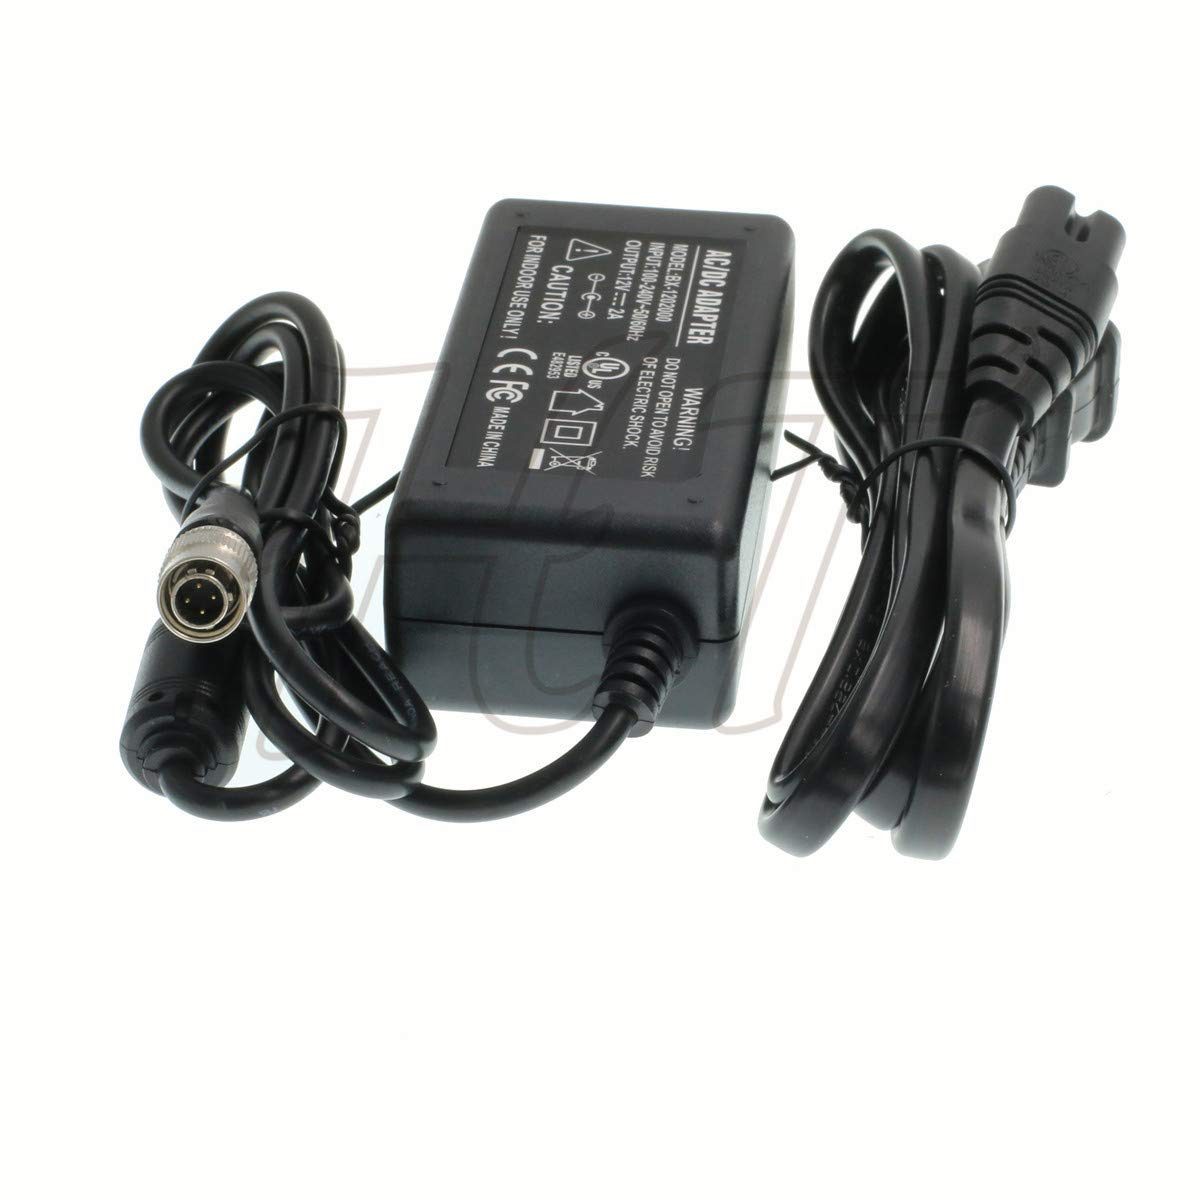 Hirose 4 Pin AC DC Netzteil Adapter für Soundgeräte 702T 688 552 Zoom F4 F8 Recorder ZAXCOM MixPre Serie